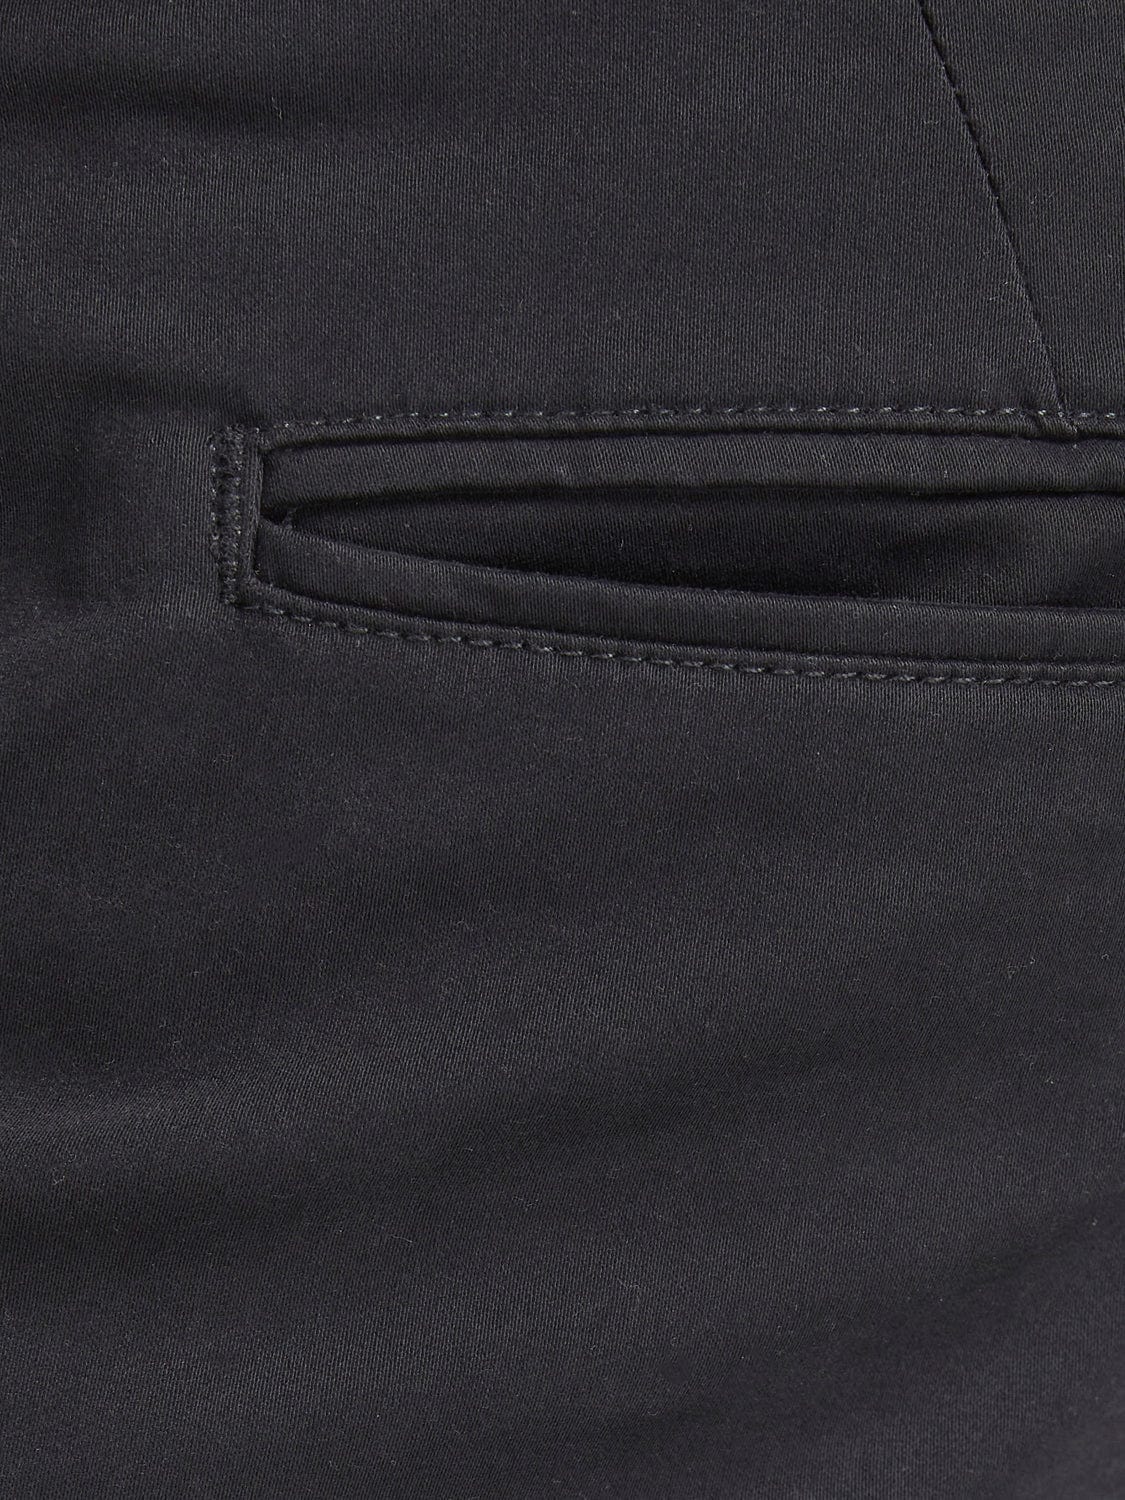 Pantalón chino negro -MARCO BOWIE